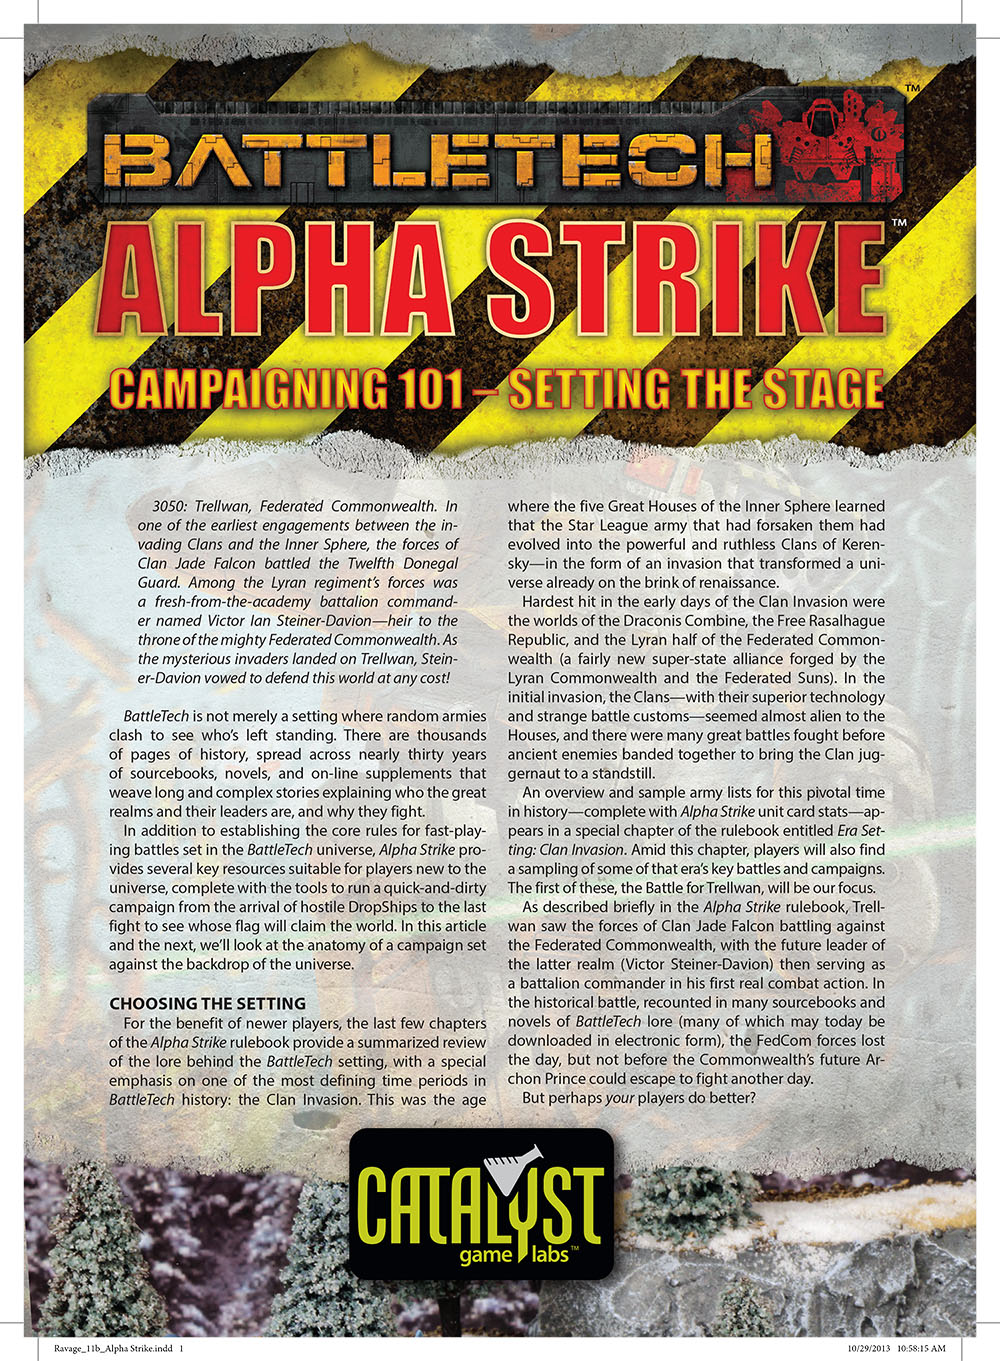 Ravage_11_Alpha StrikeArticle-Page1